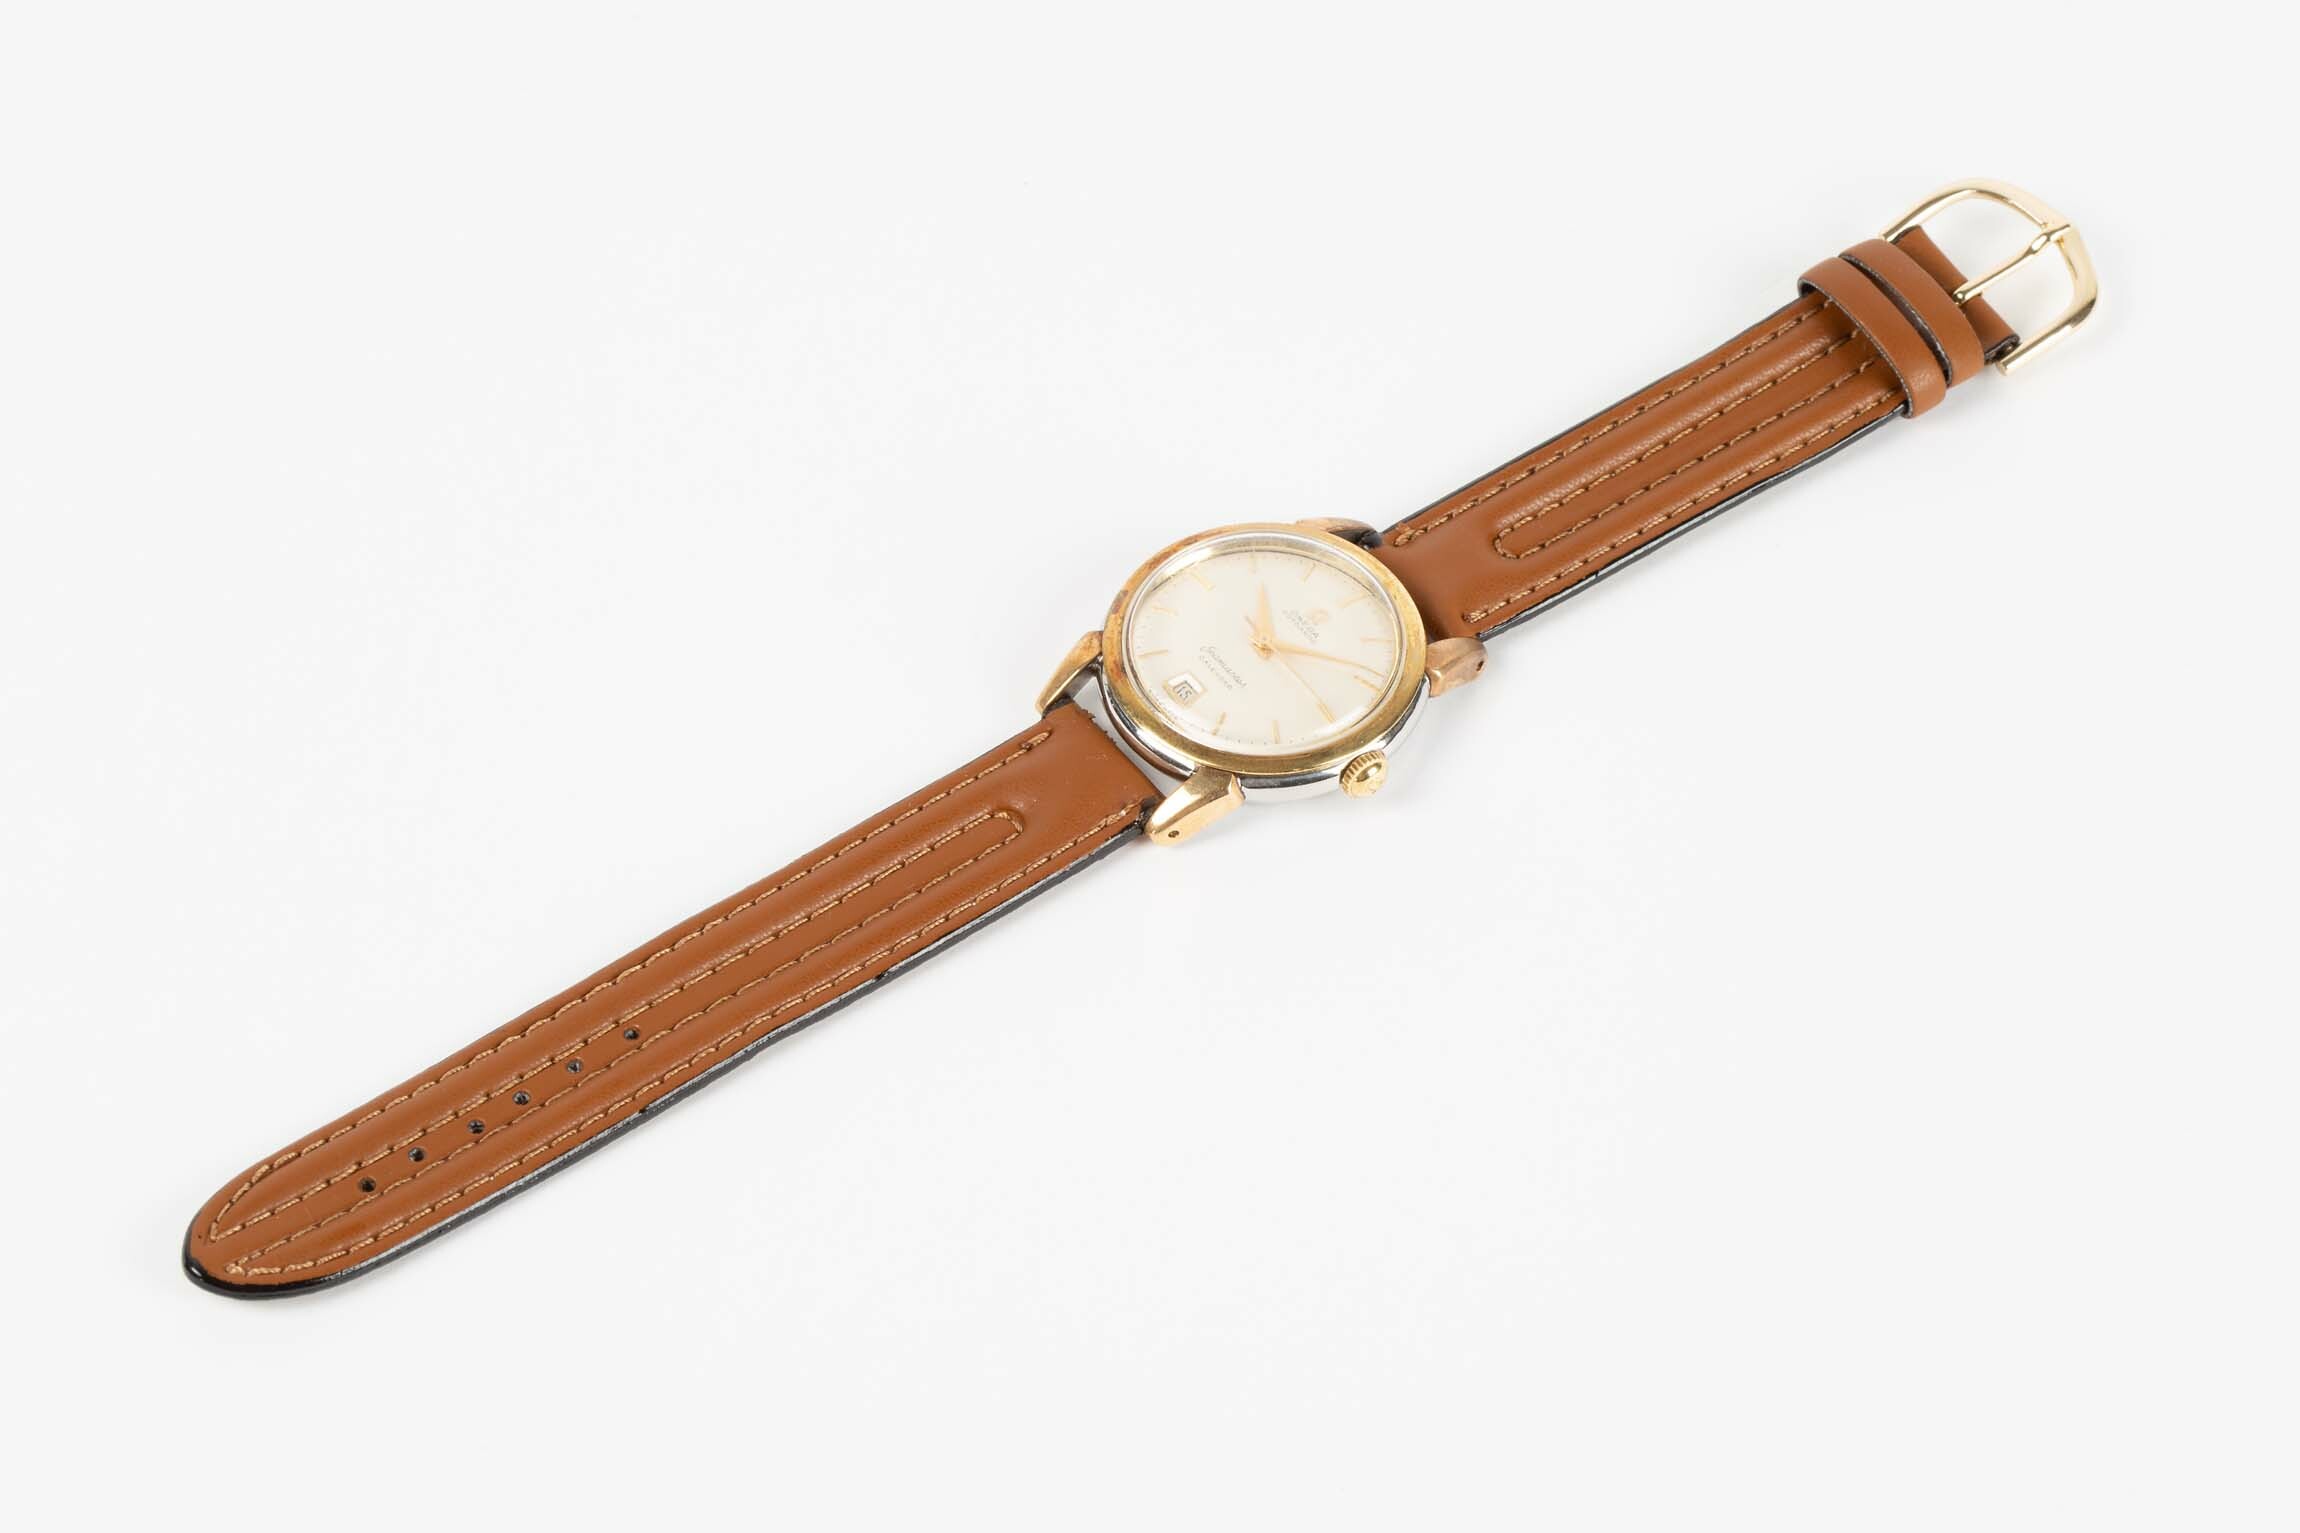 Armbanduhr, Omega, Biel (CH), um 1950 (Deutsches Uhrenmuseum CC BY-SA)